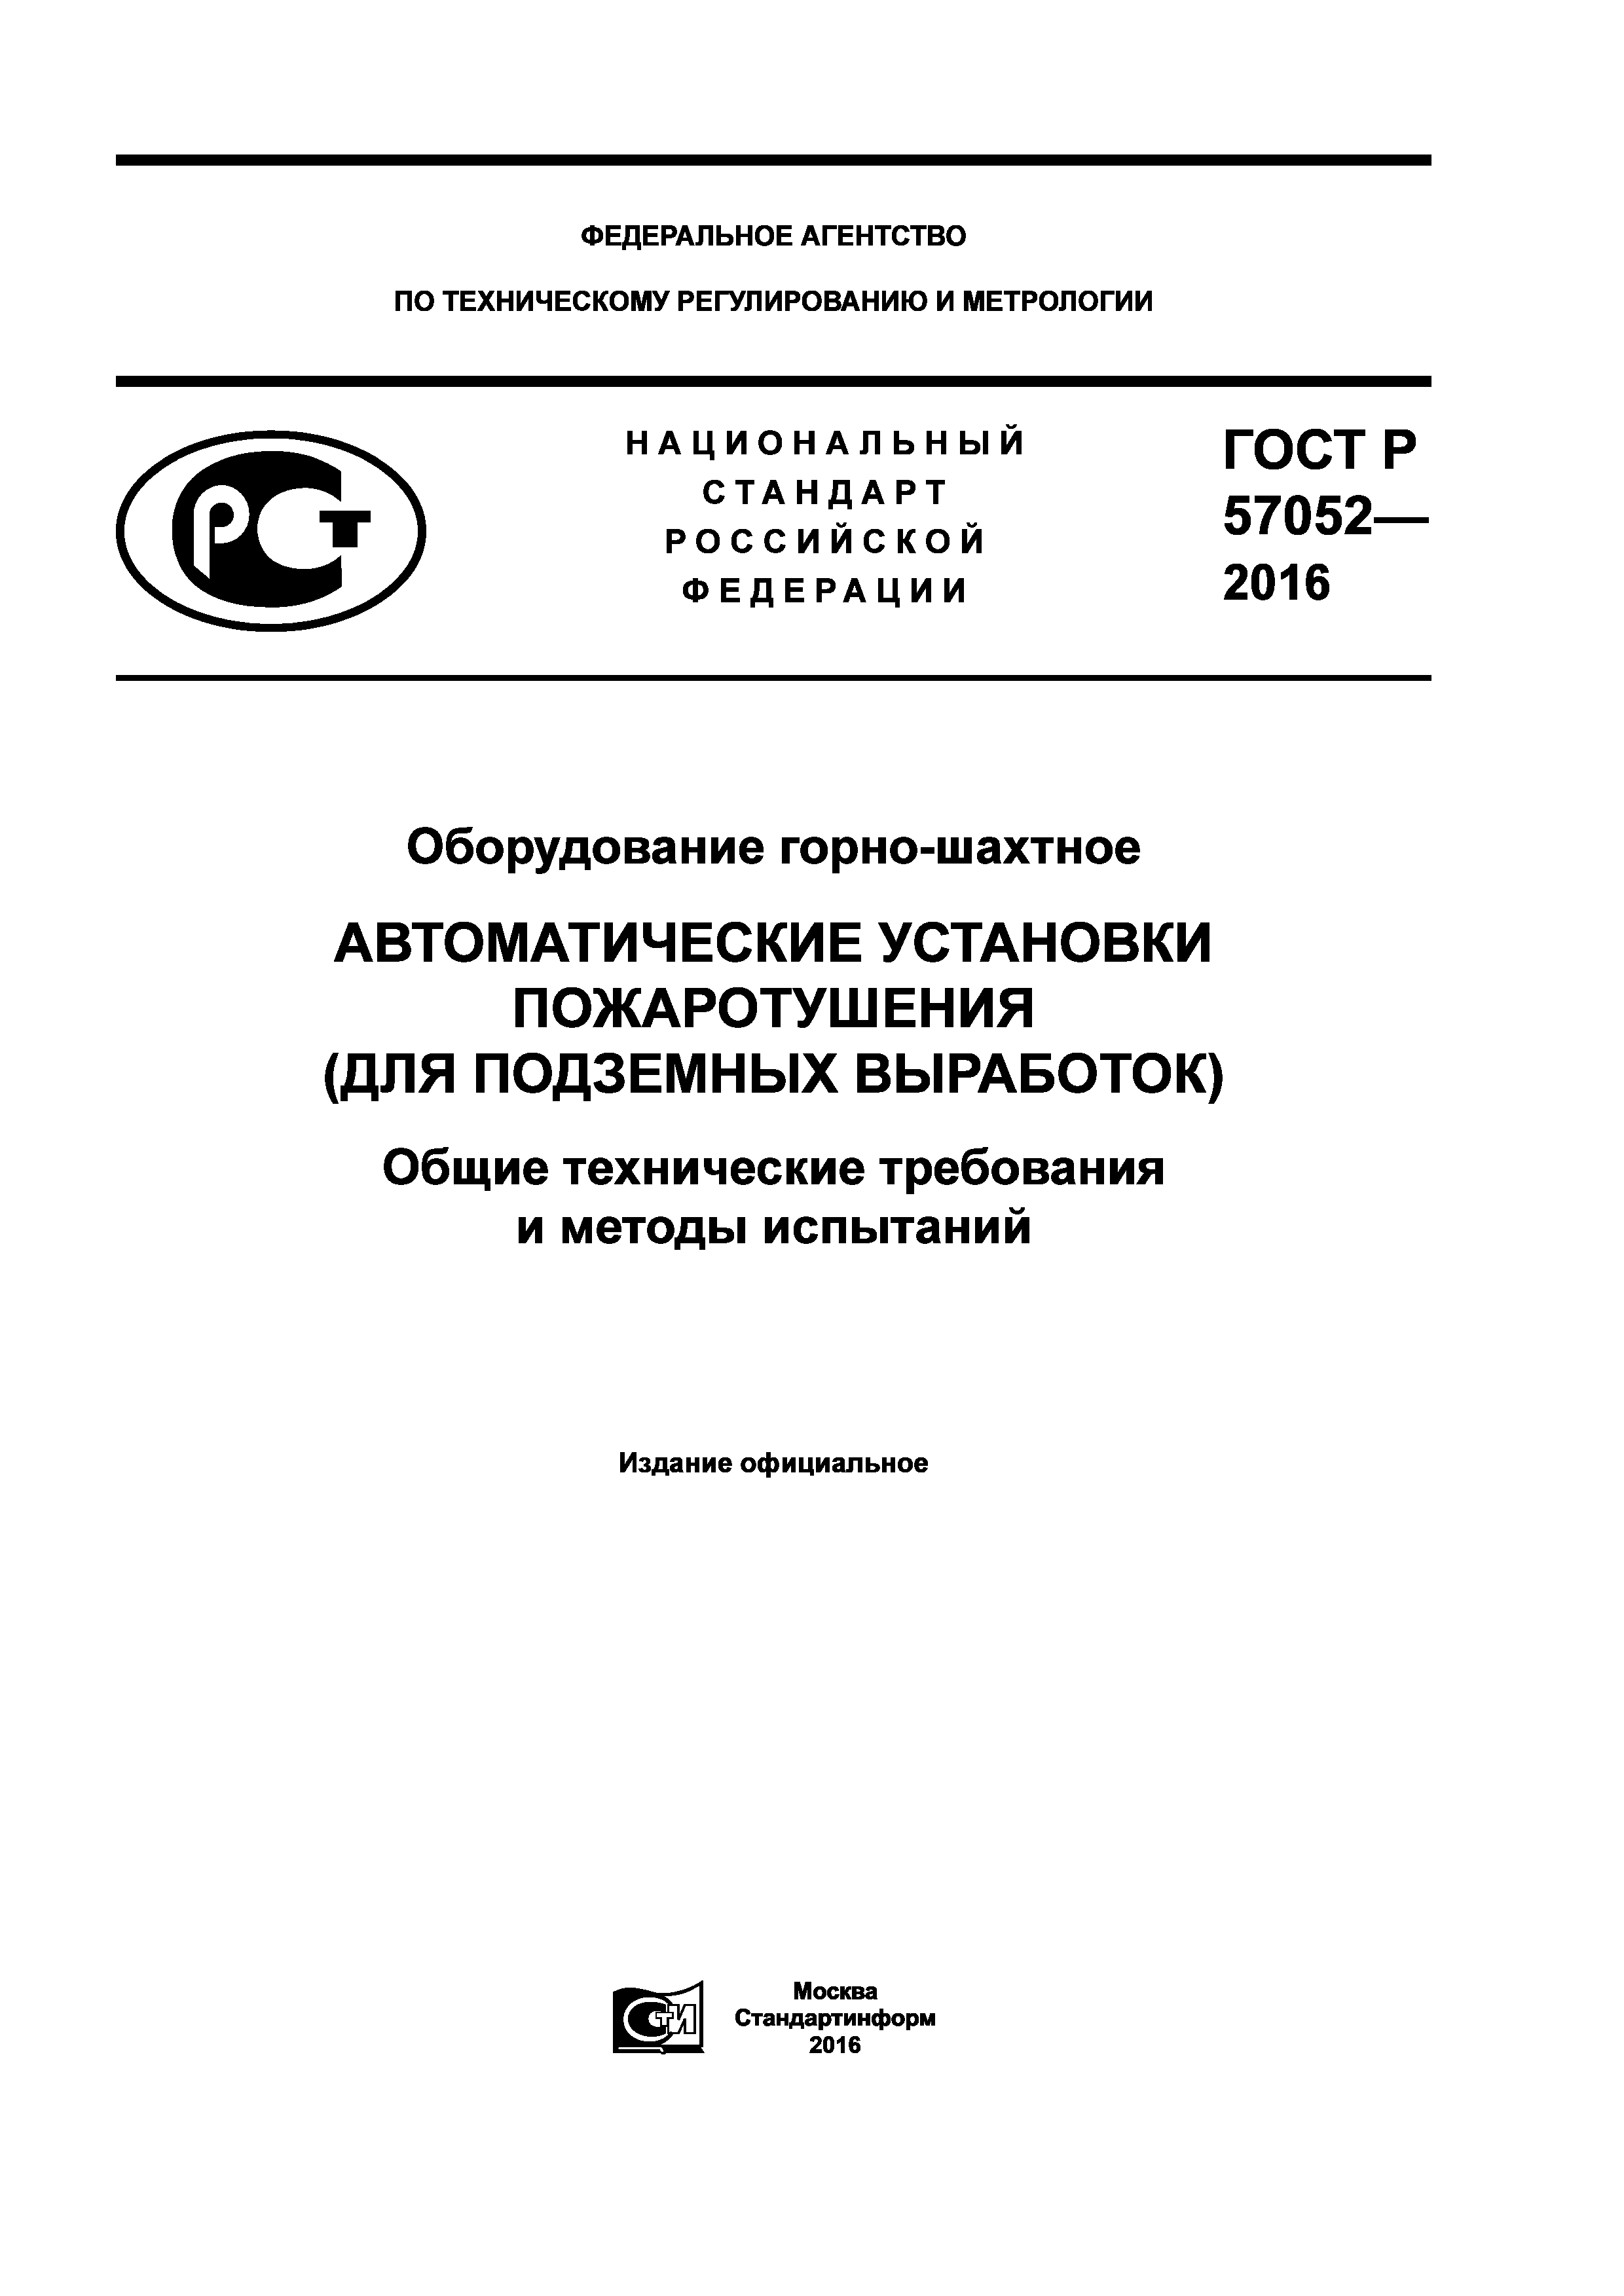 ГОСТ Р 57052-2016